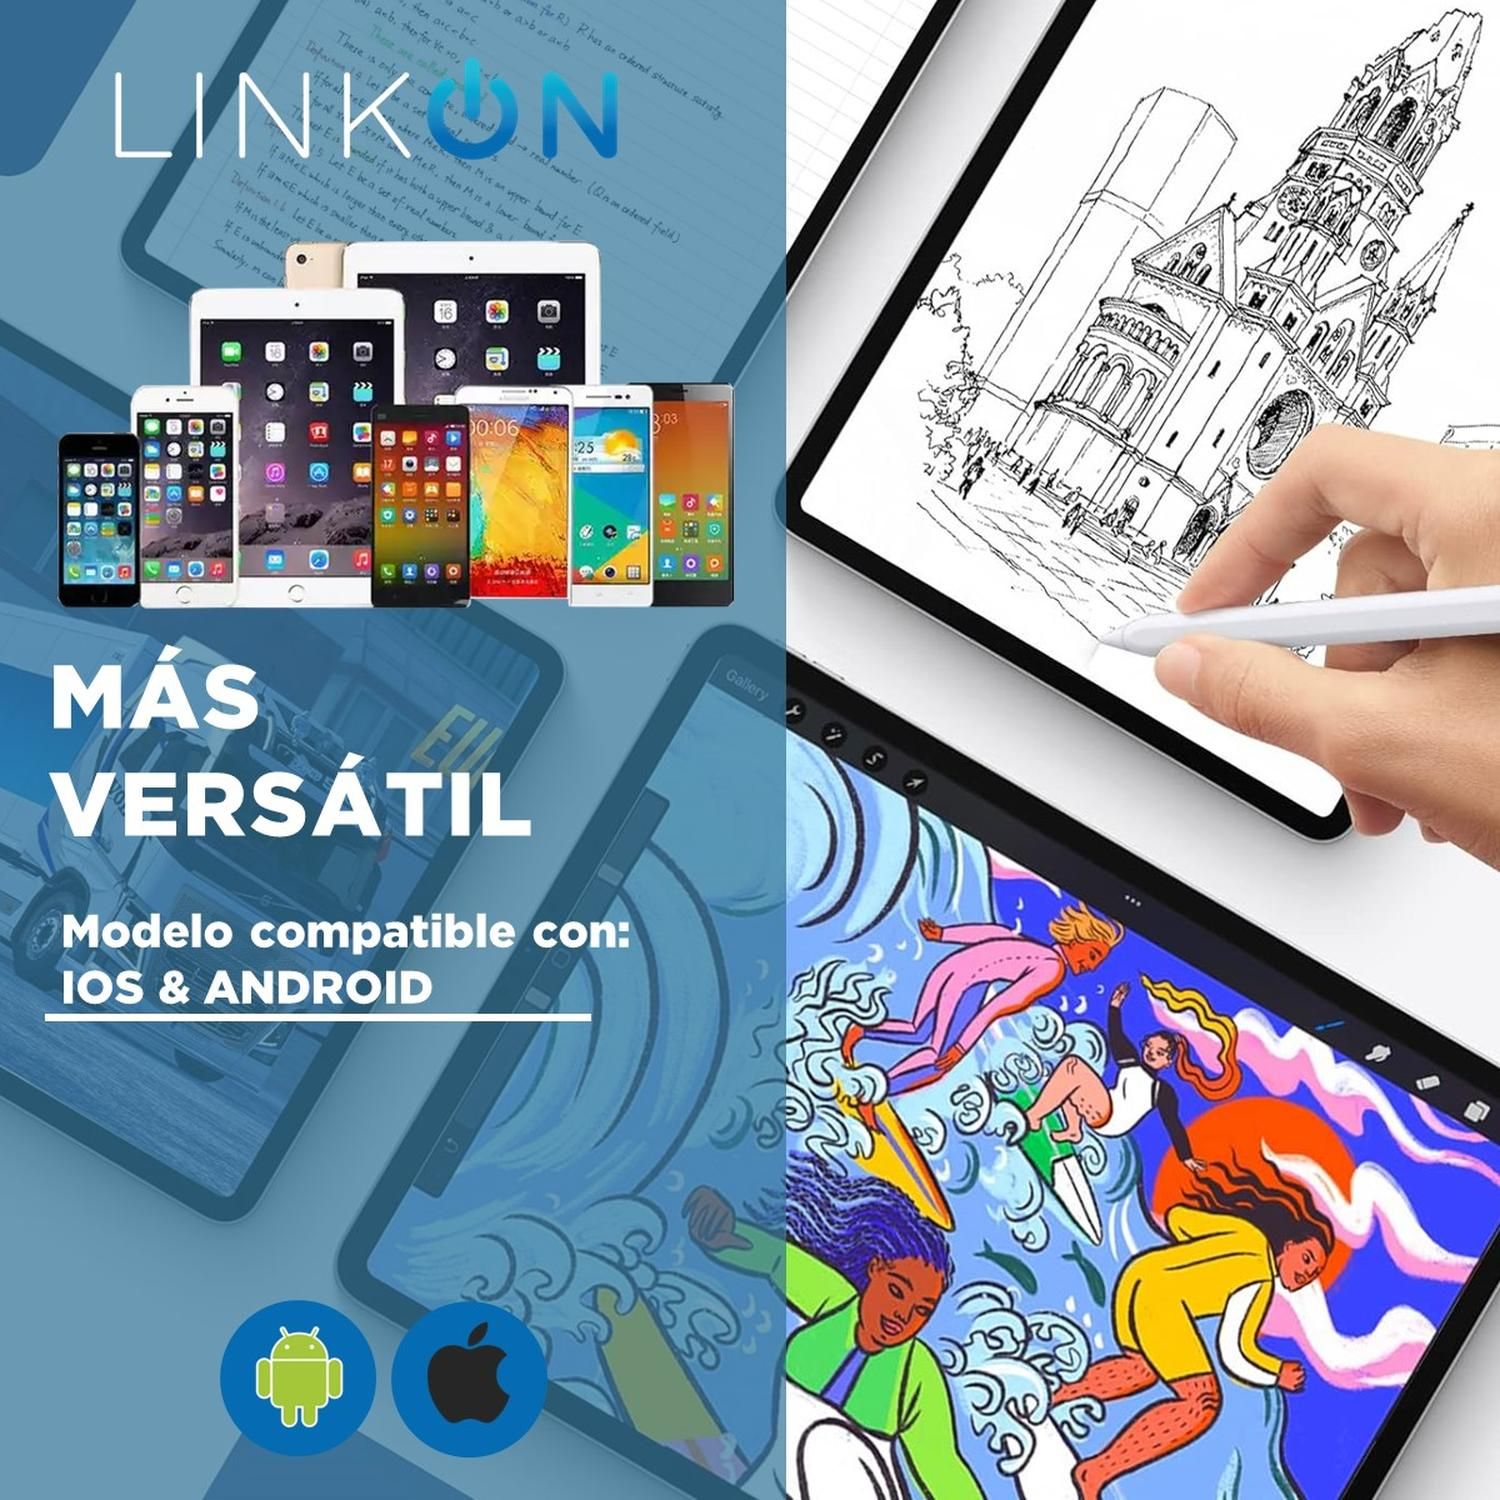 LINKON Lapiz Pencil Tactil Linkon Universal para Ipad Galaxy Tablet